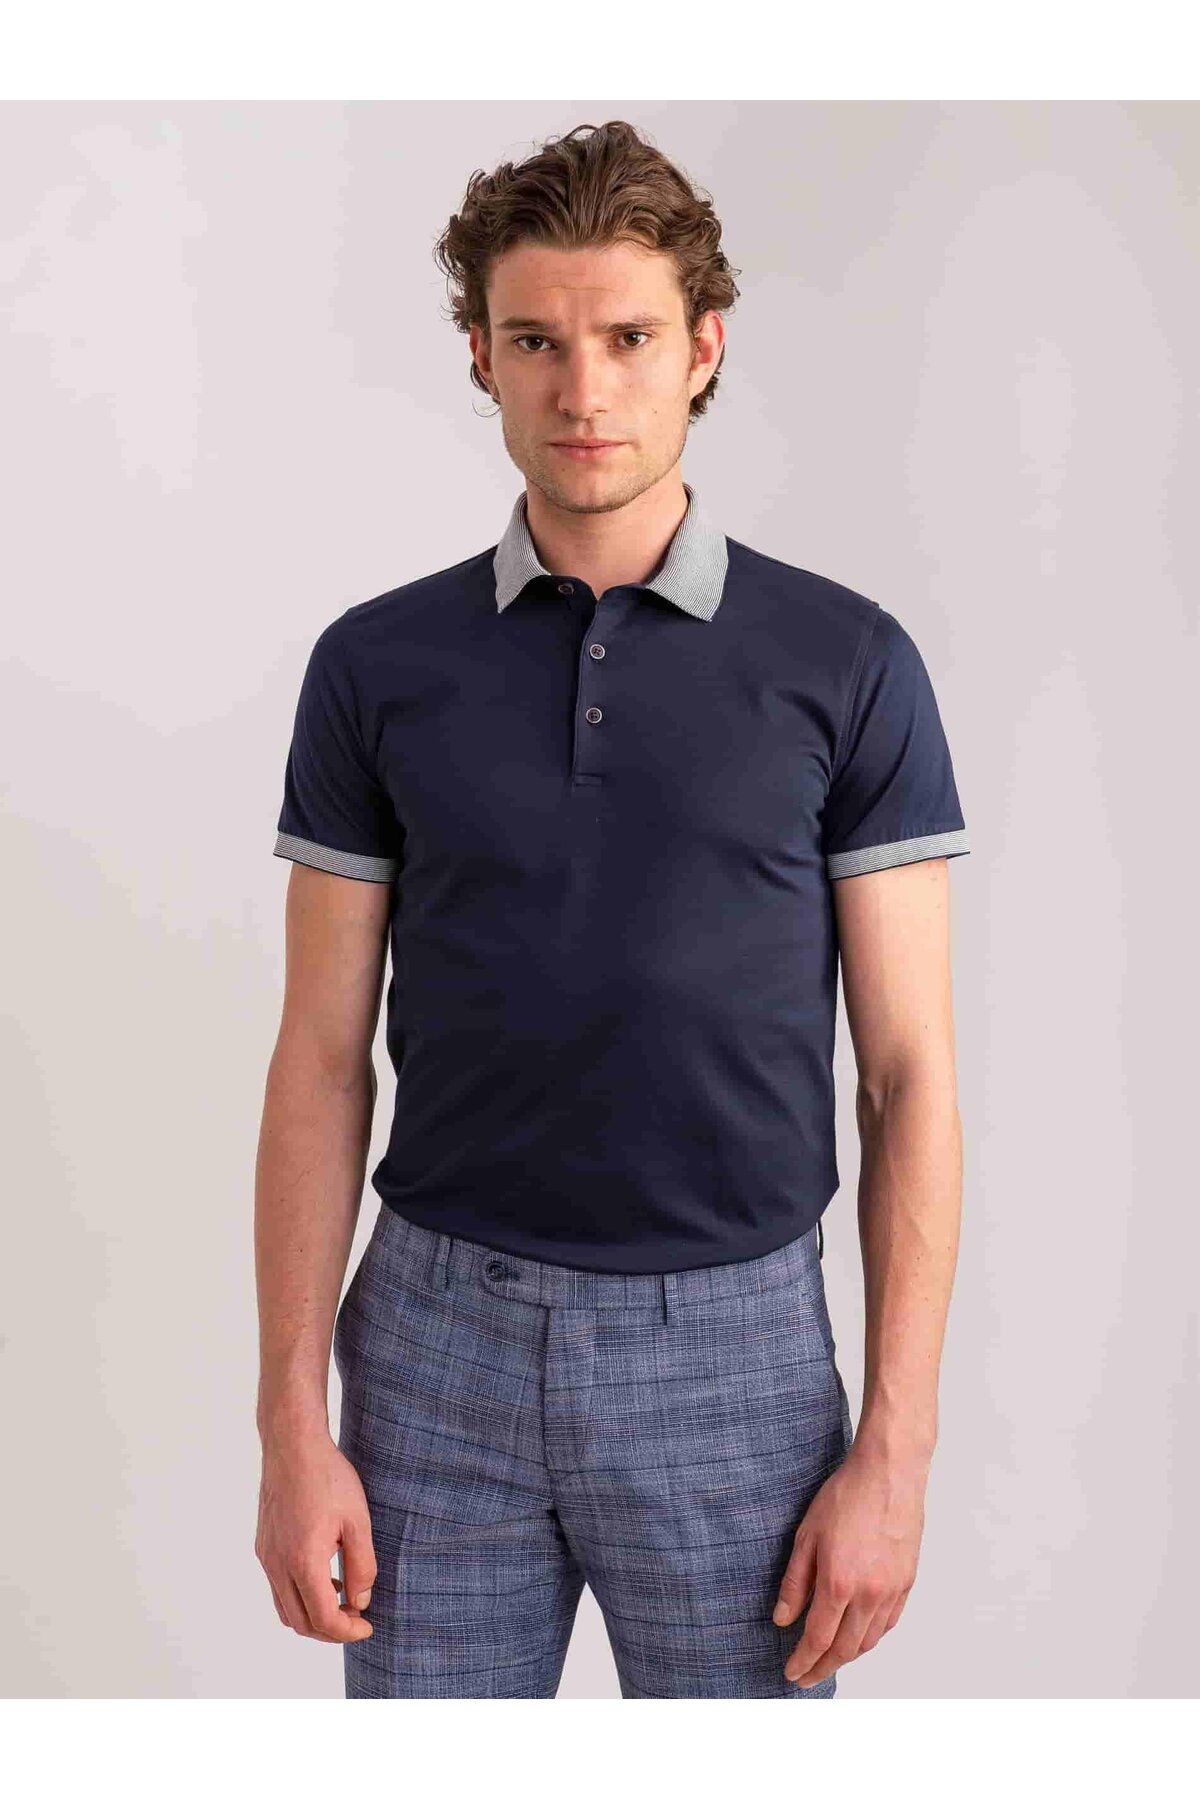 Dufy Lacivert Erkek Slim Fit Düz Casual Polo Yaka Tshirt - 55011